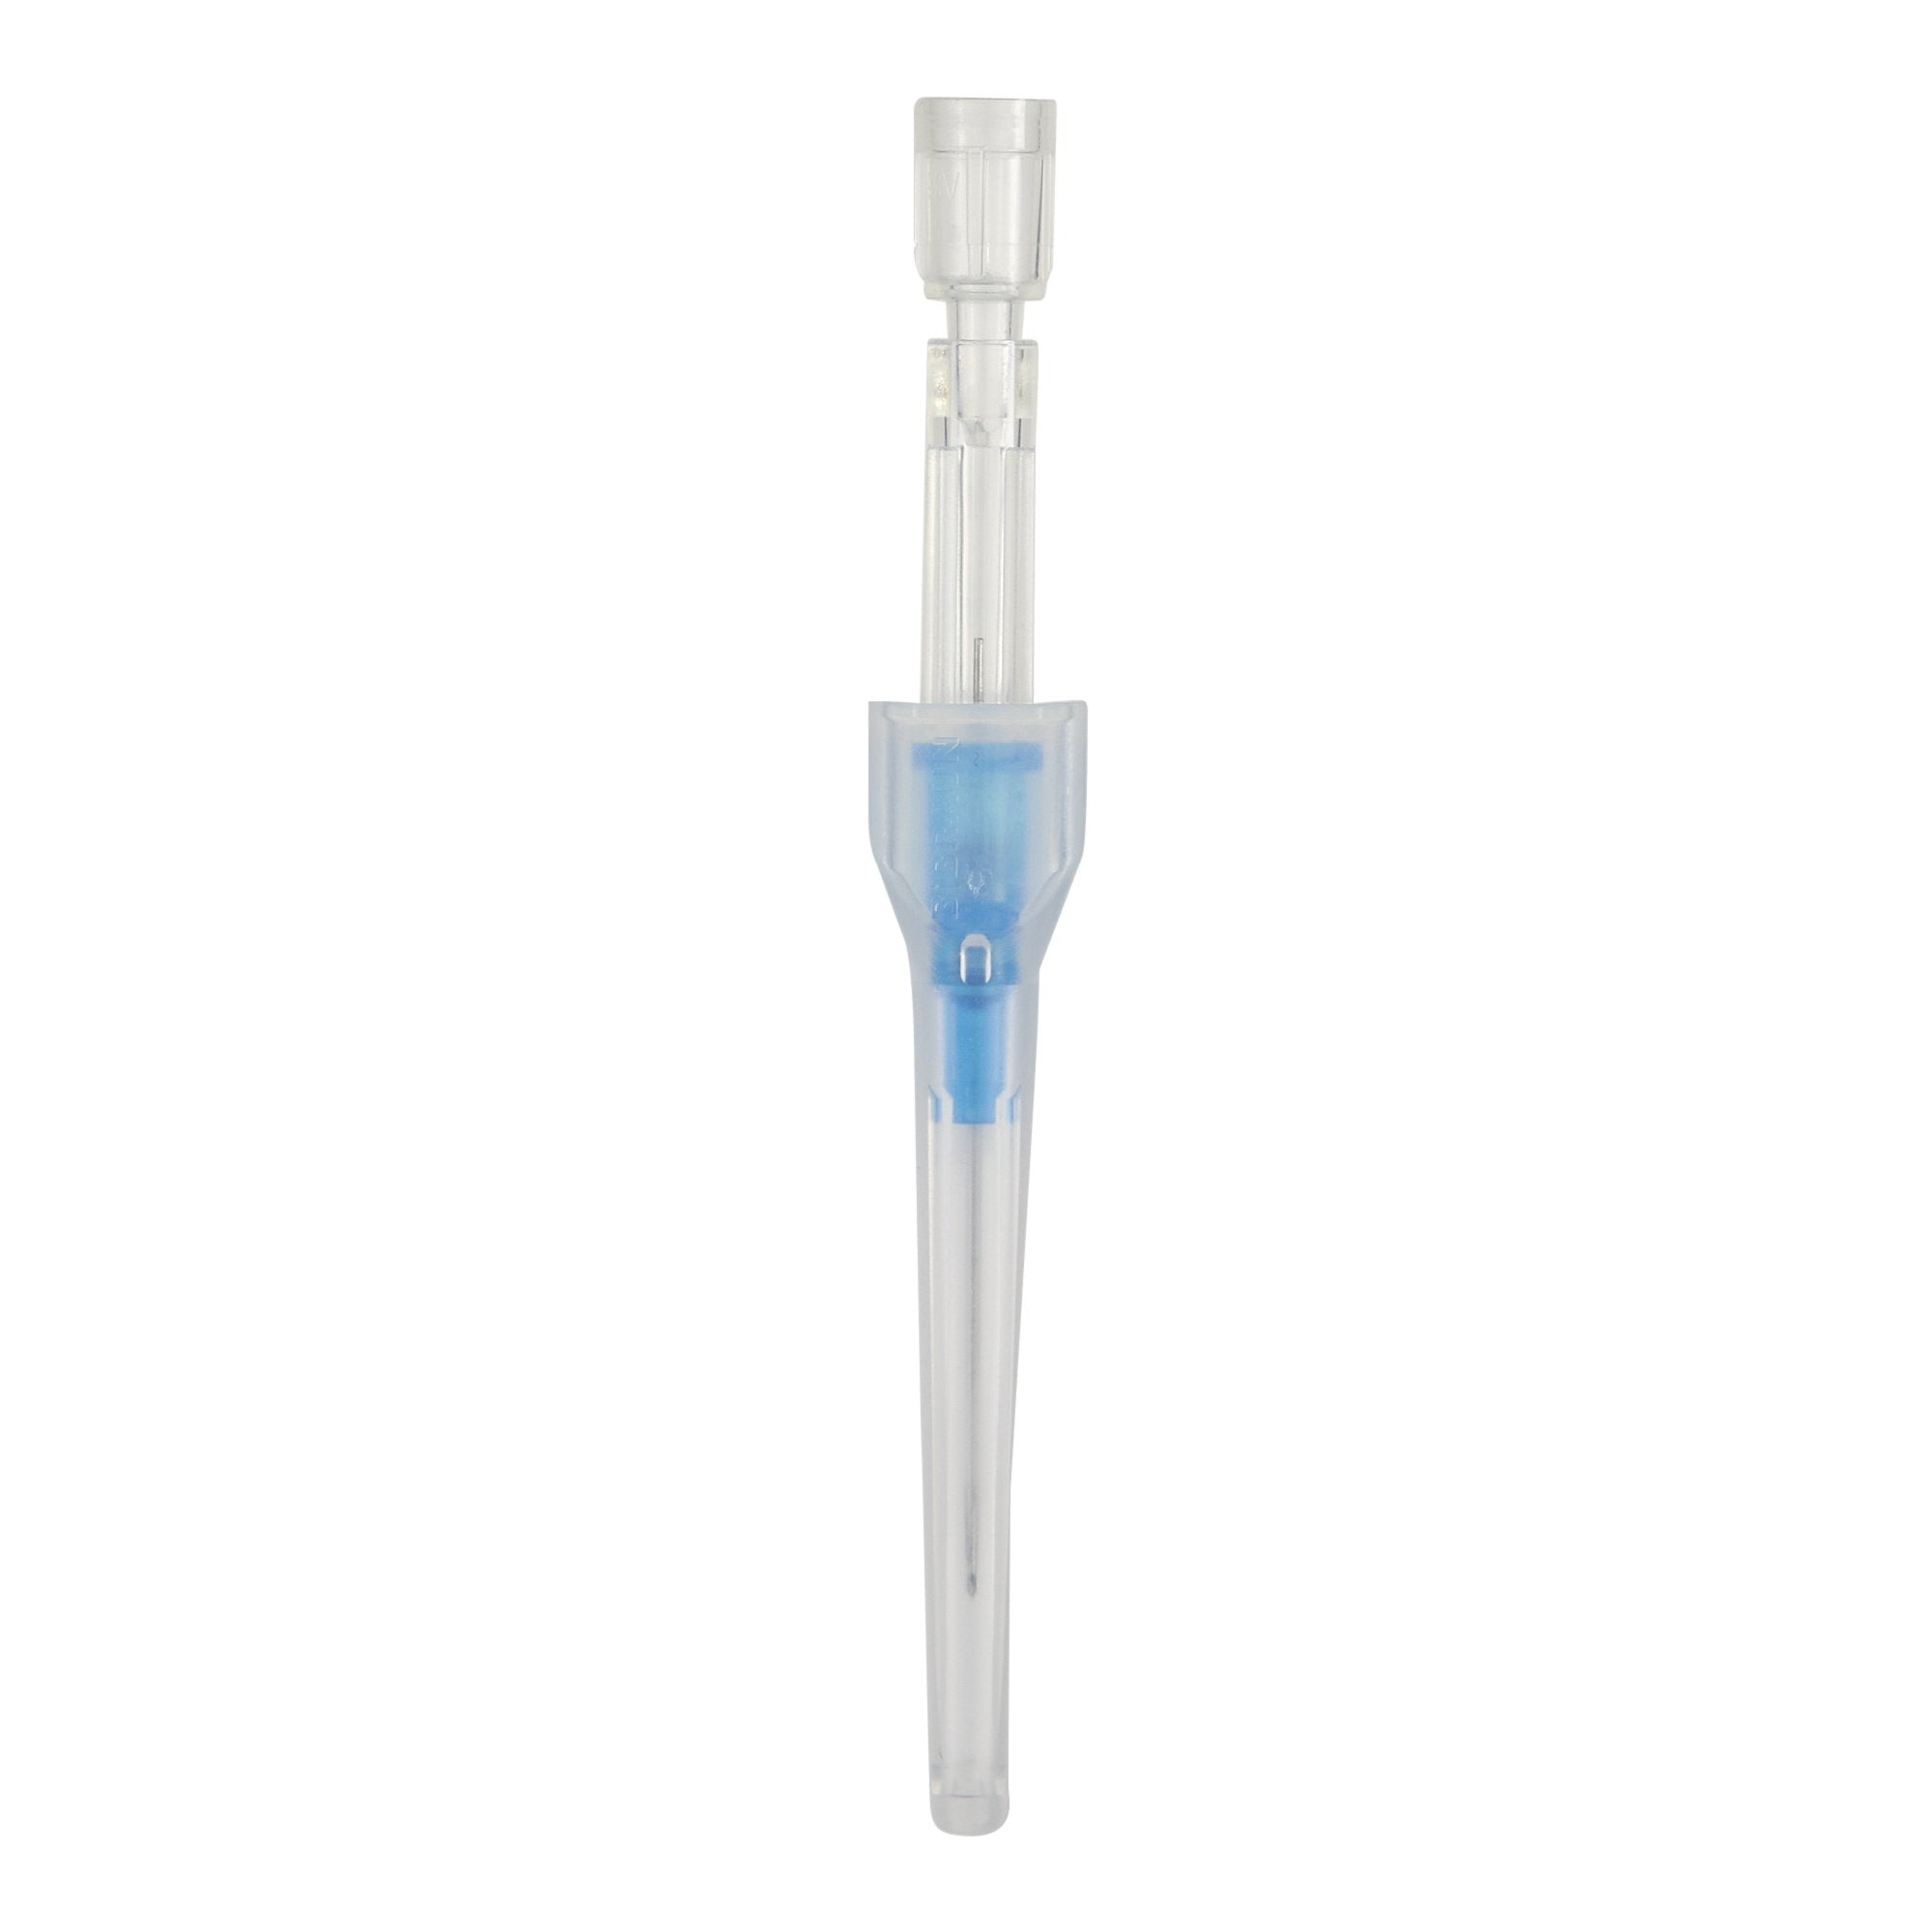 Peripheral IV Catheter Introcan Safety 22 Gauge 1 Inch Sliding Safety Needle